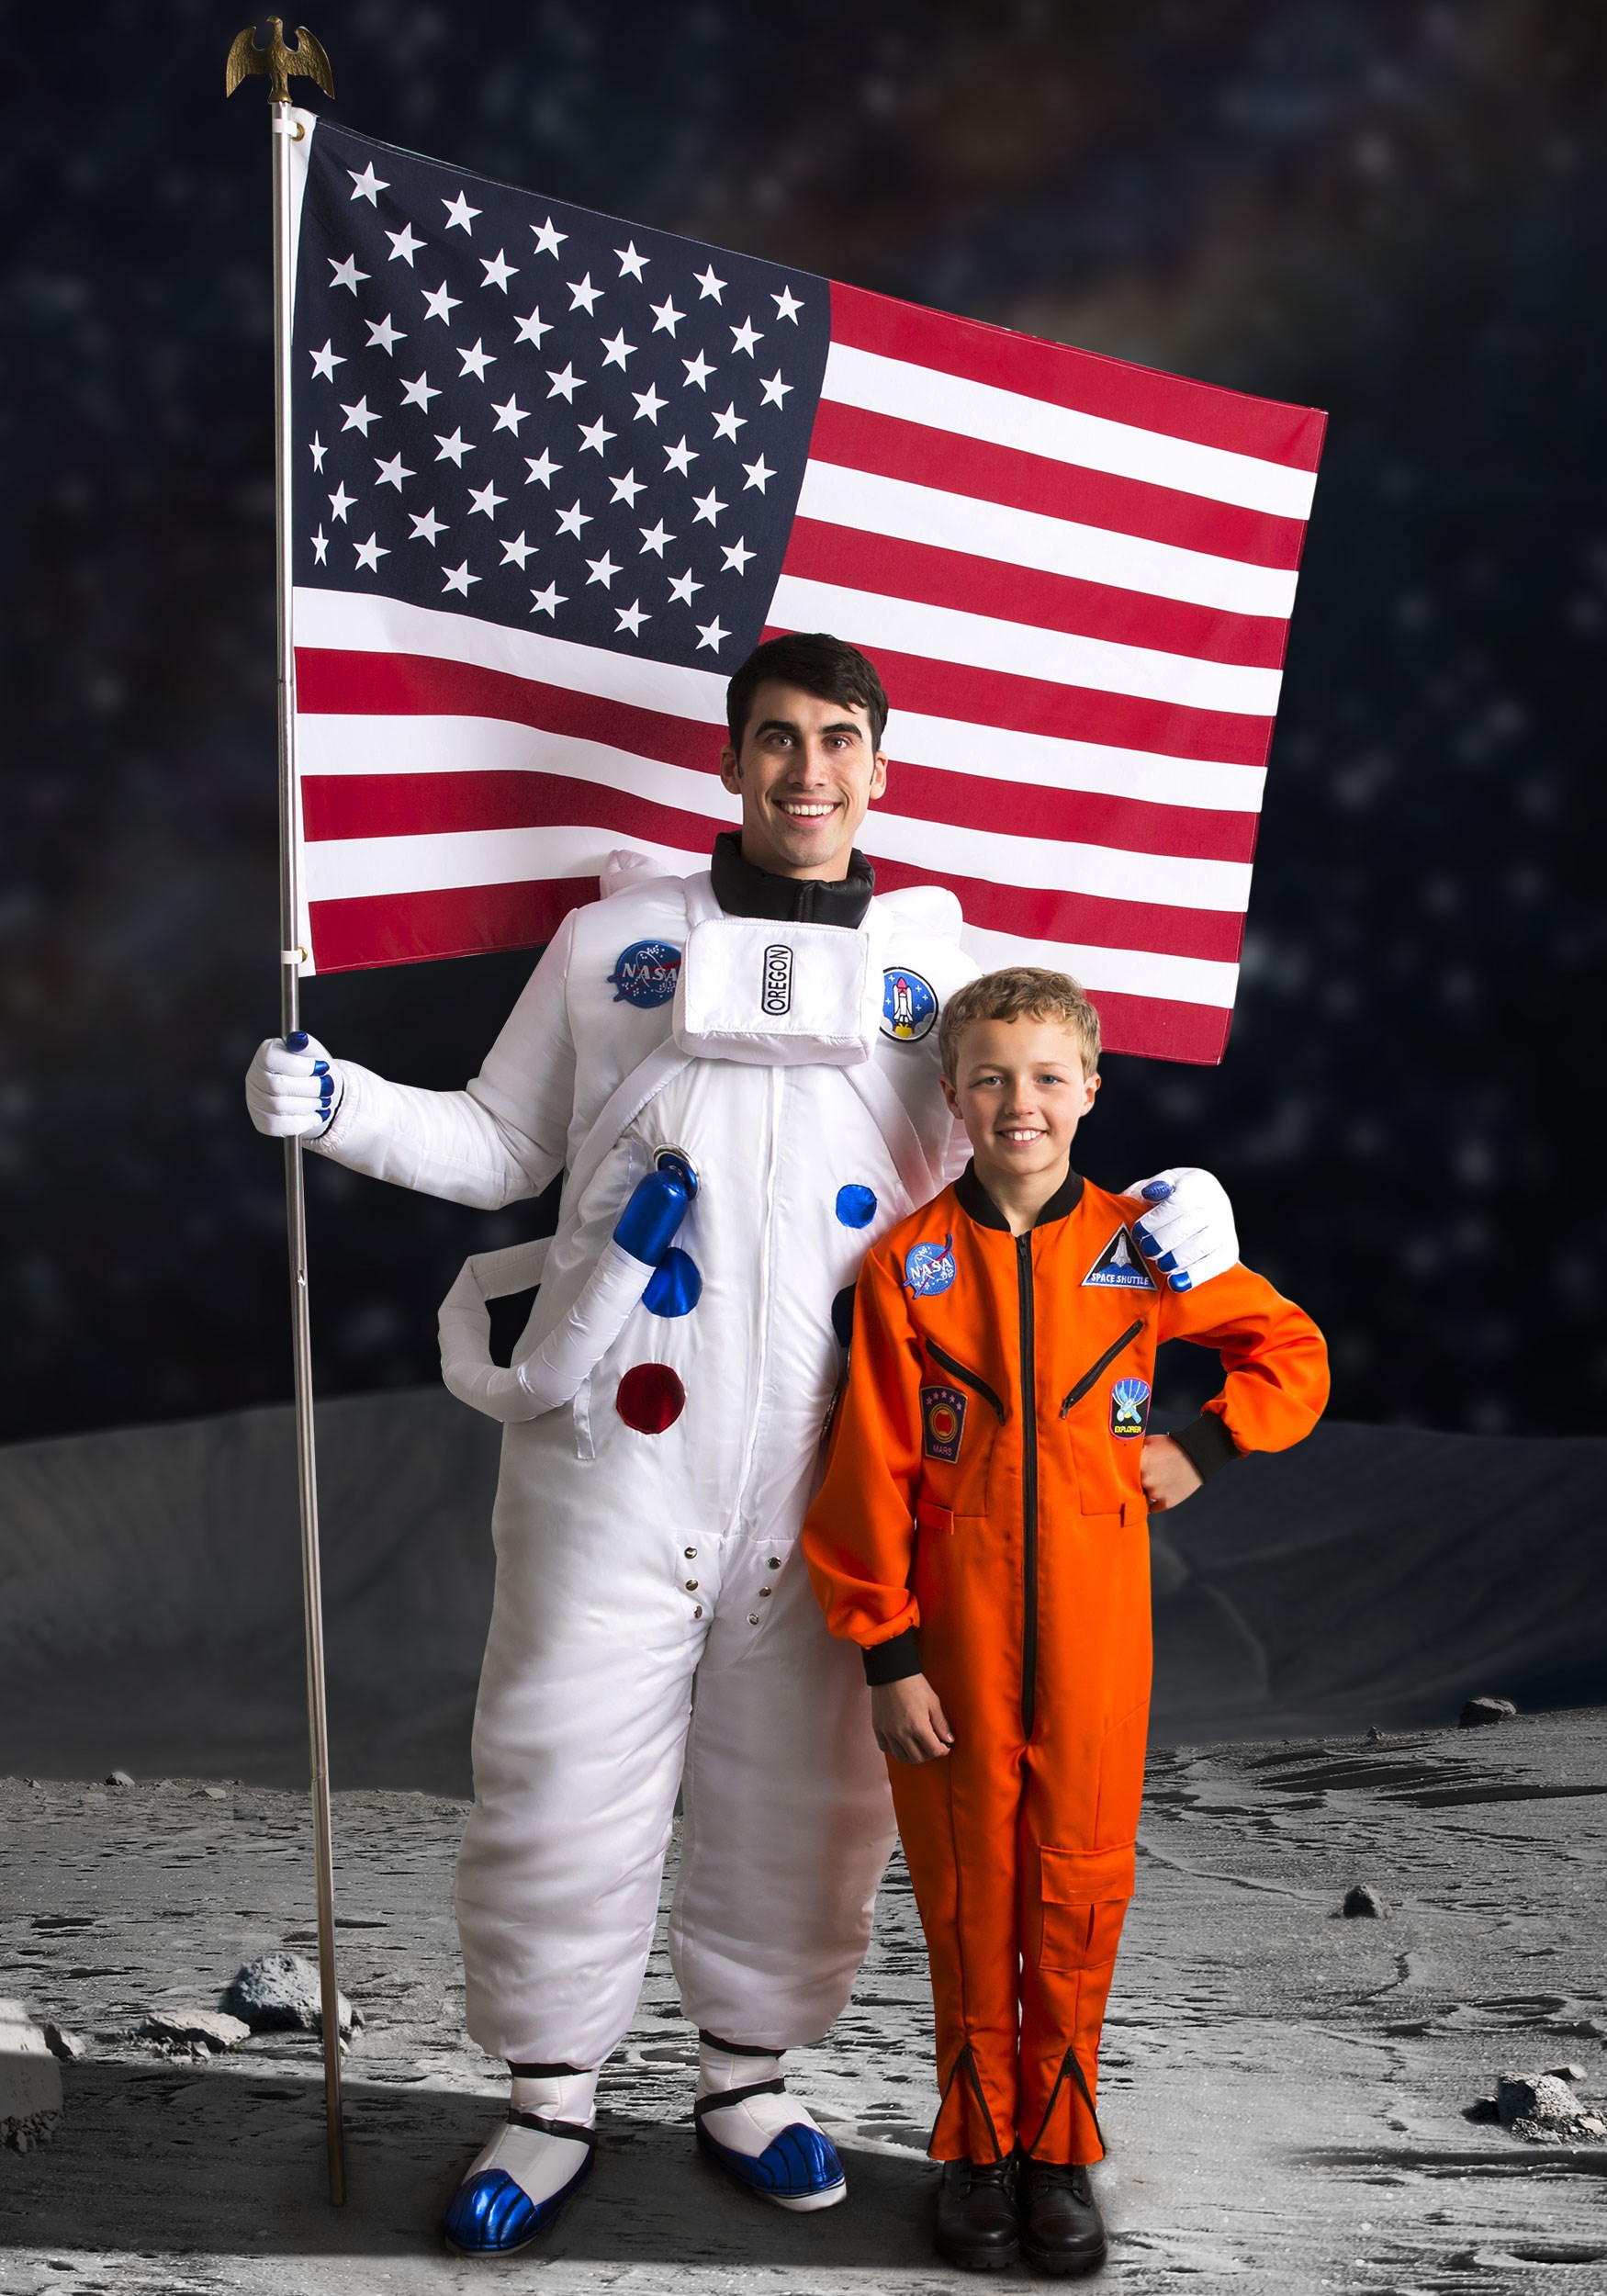 Orange Astronaut Jumpsuit Kid's Costume